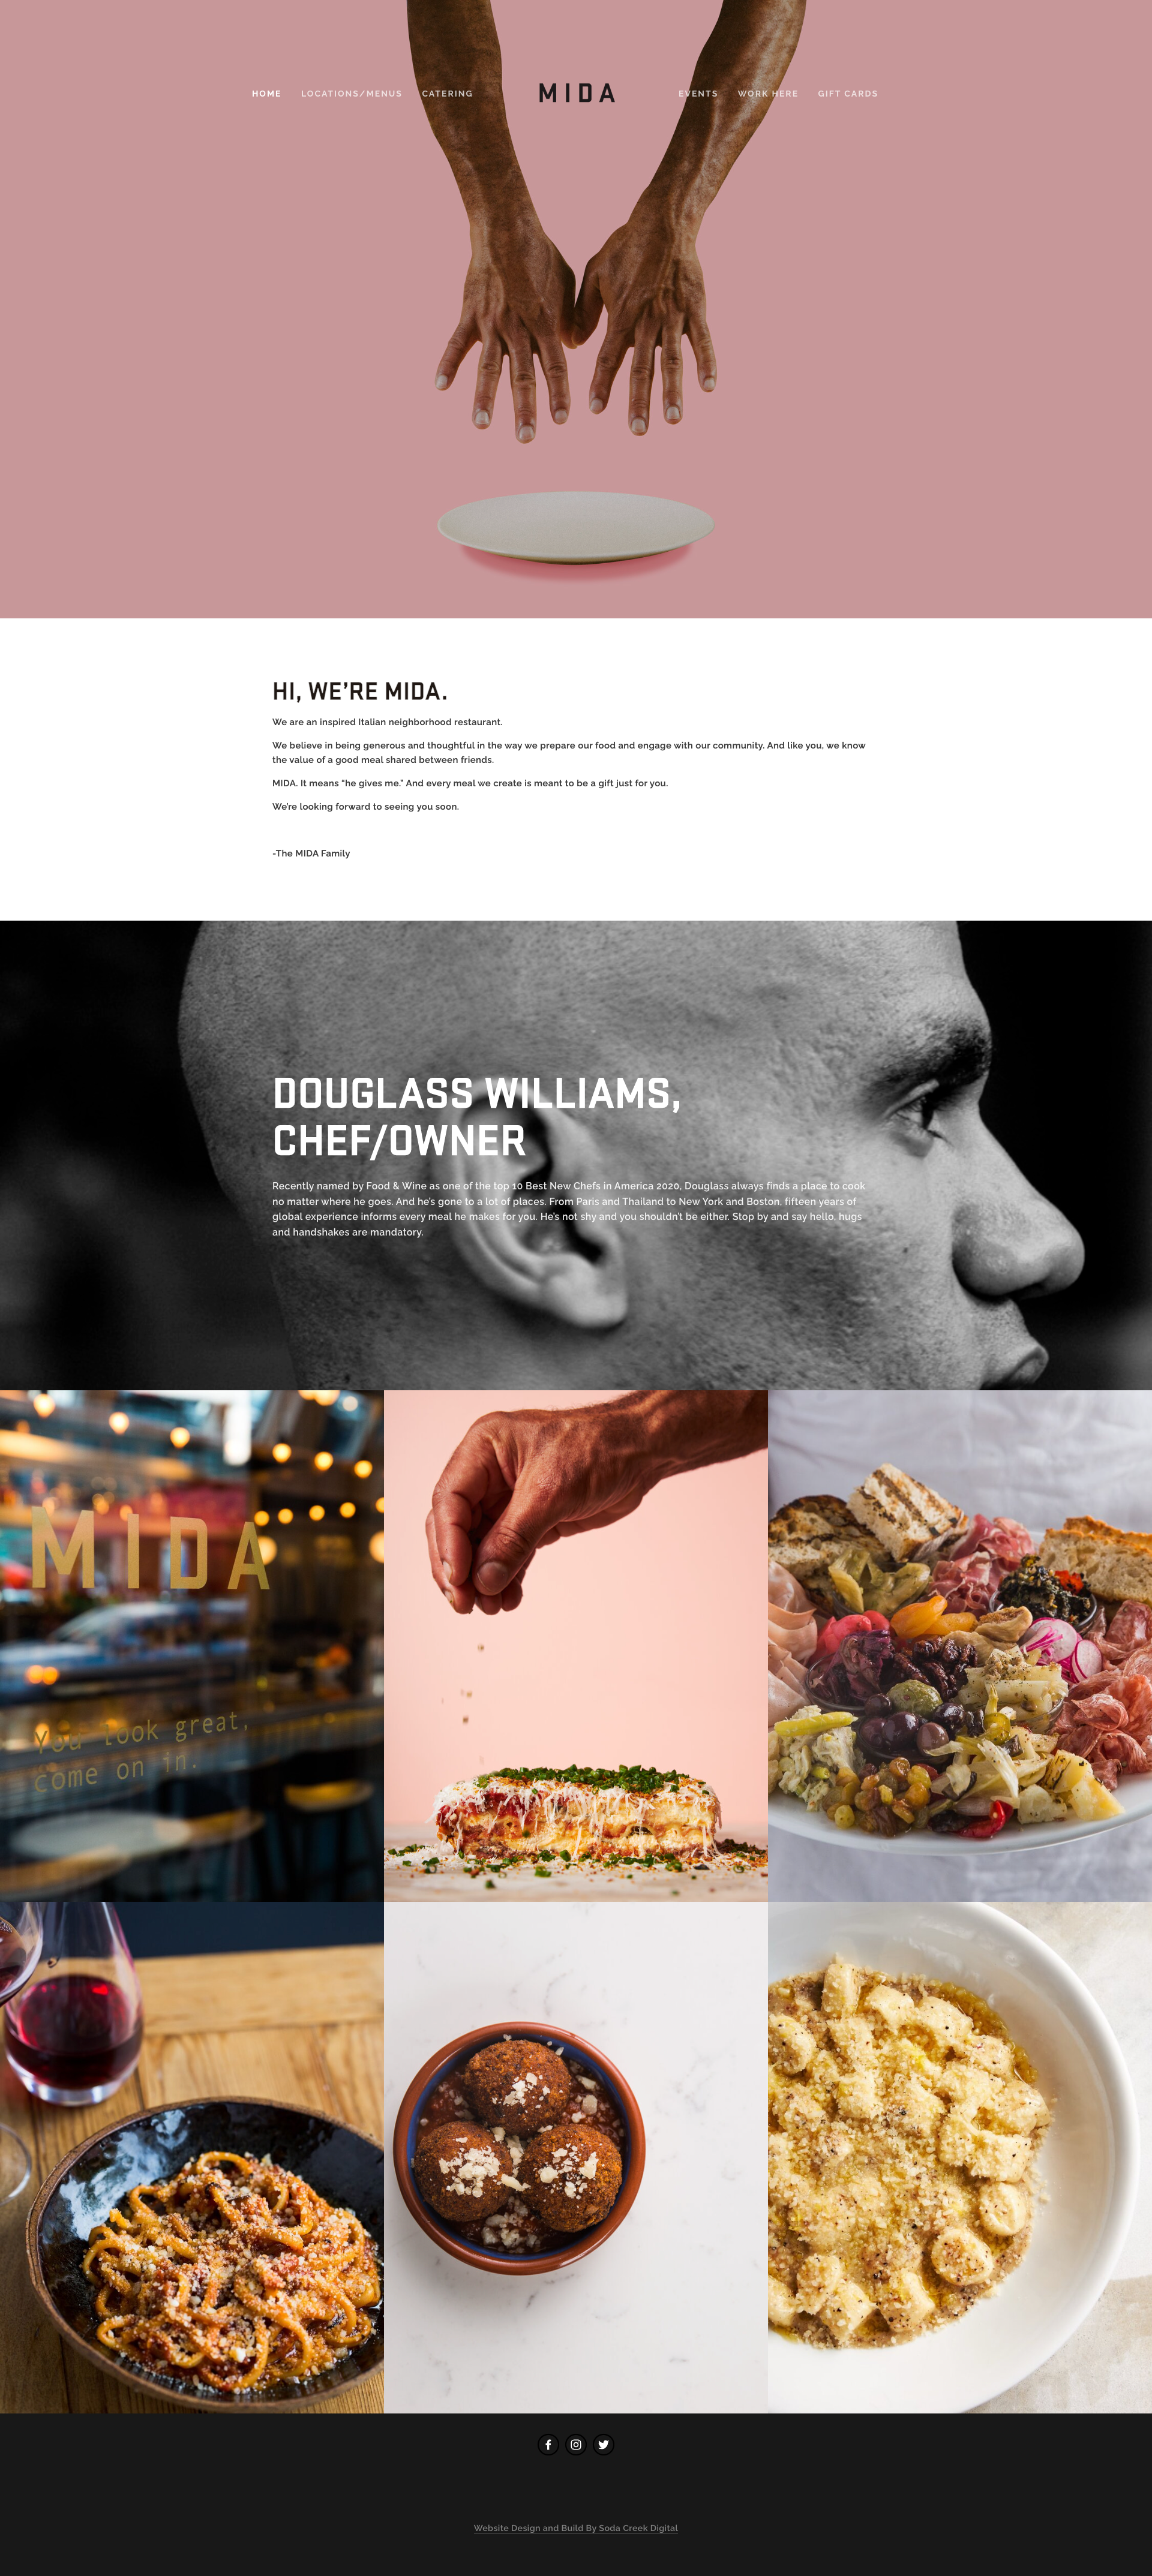 A screenshot of the MIDA restaurant website homepage